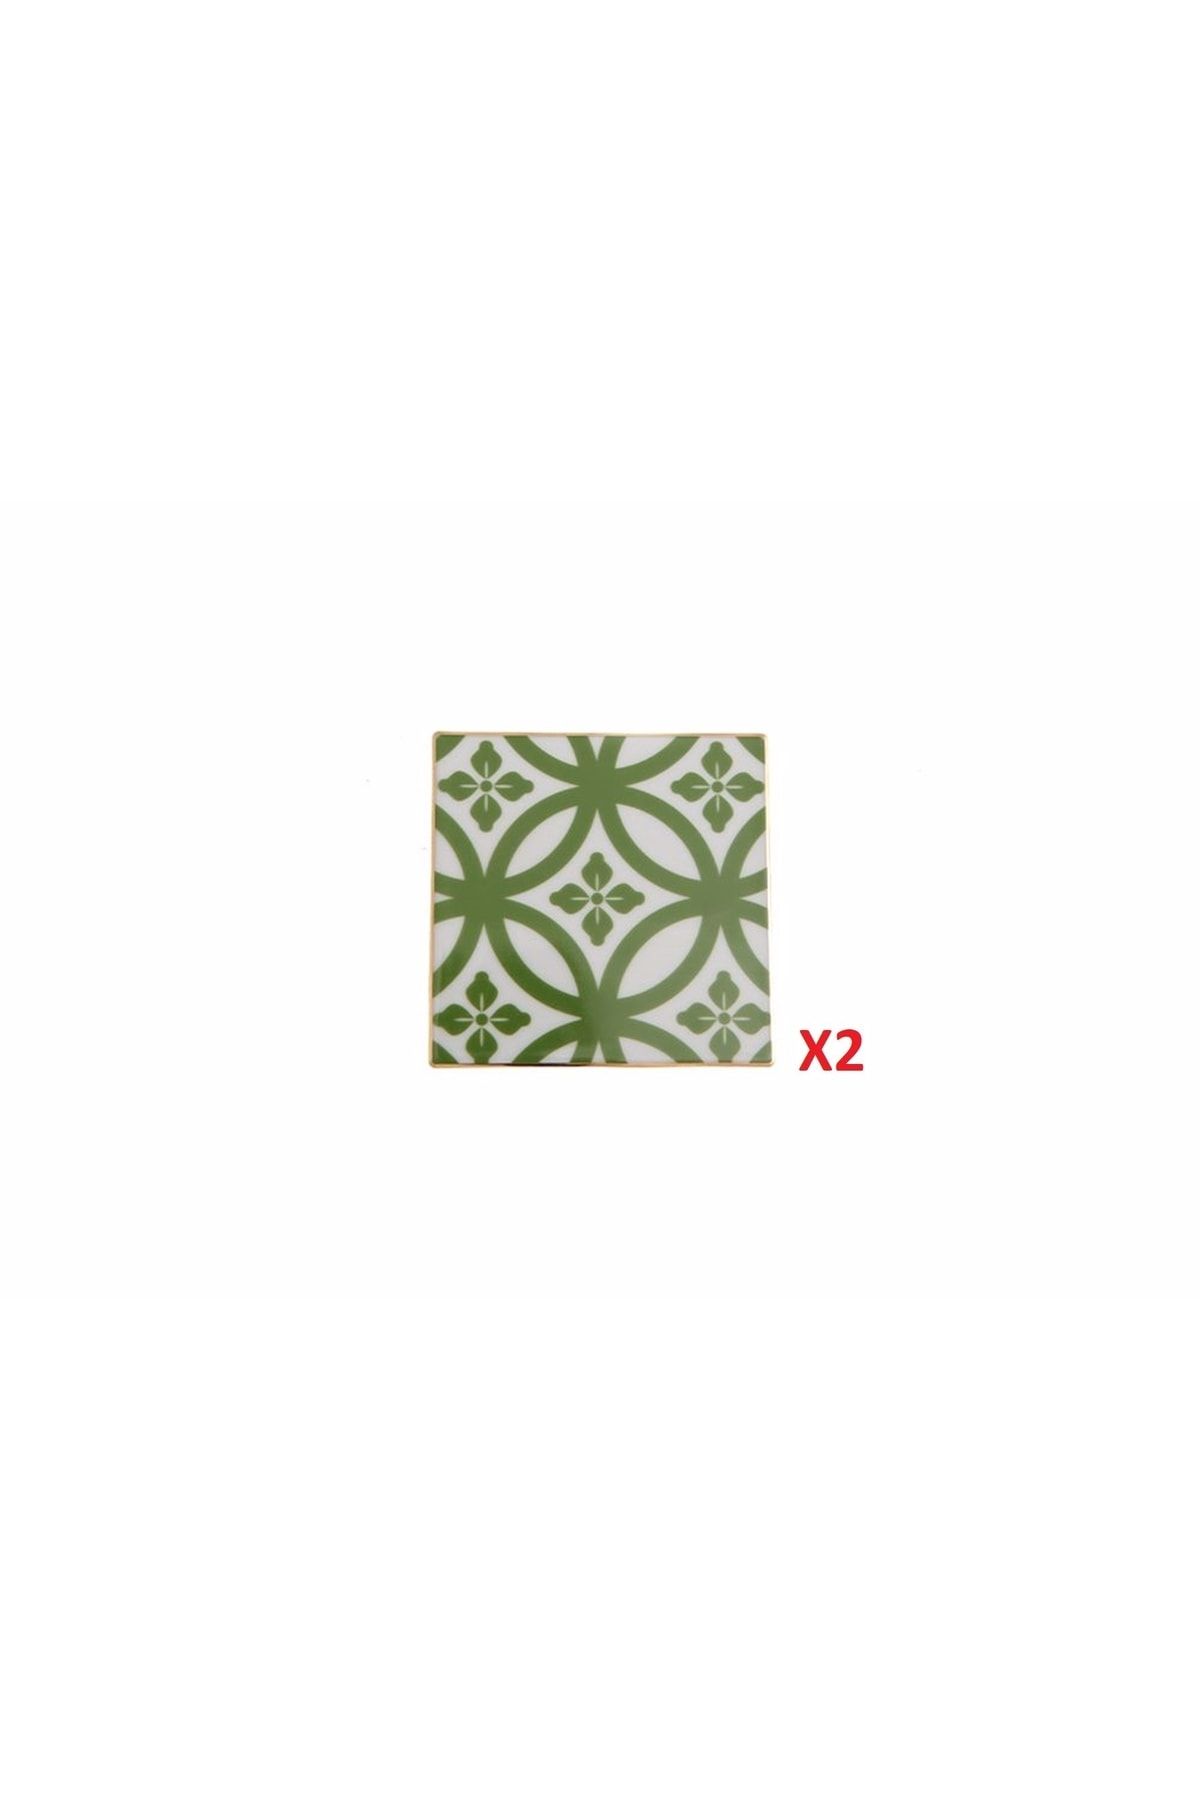 Porland Morocco Yeşil Bardak Altlığı 10x10cm 2'li 04ap021641